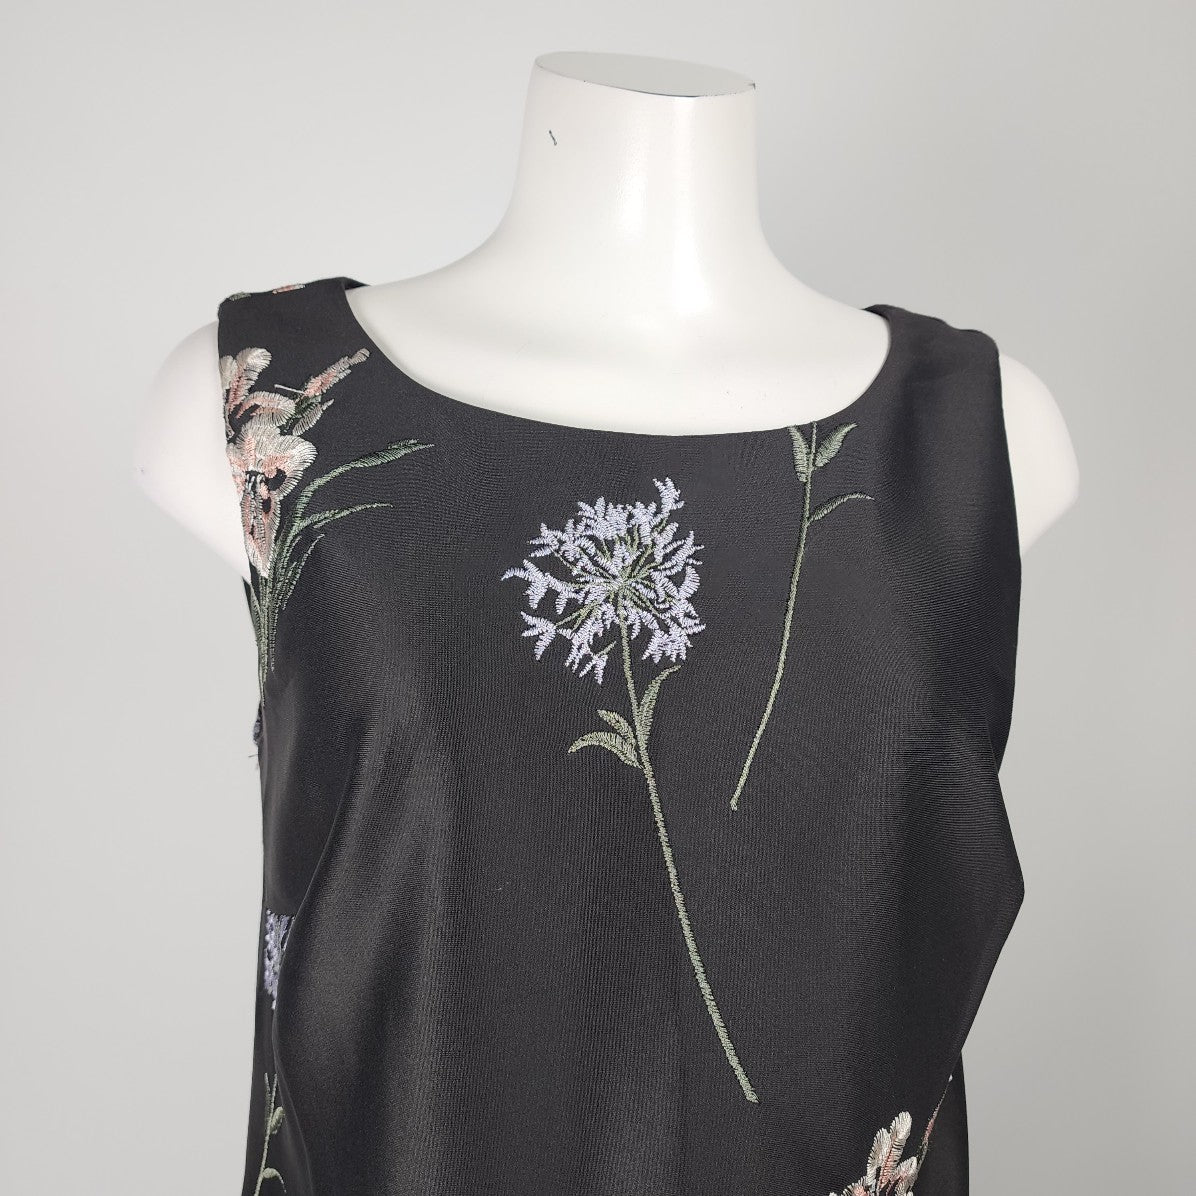 Calvin Klein Black Embroidered Floral Sheath Dress Size 10